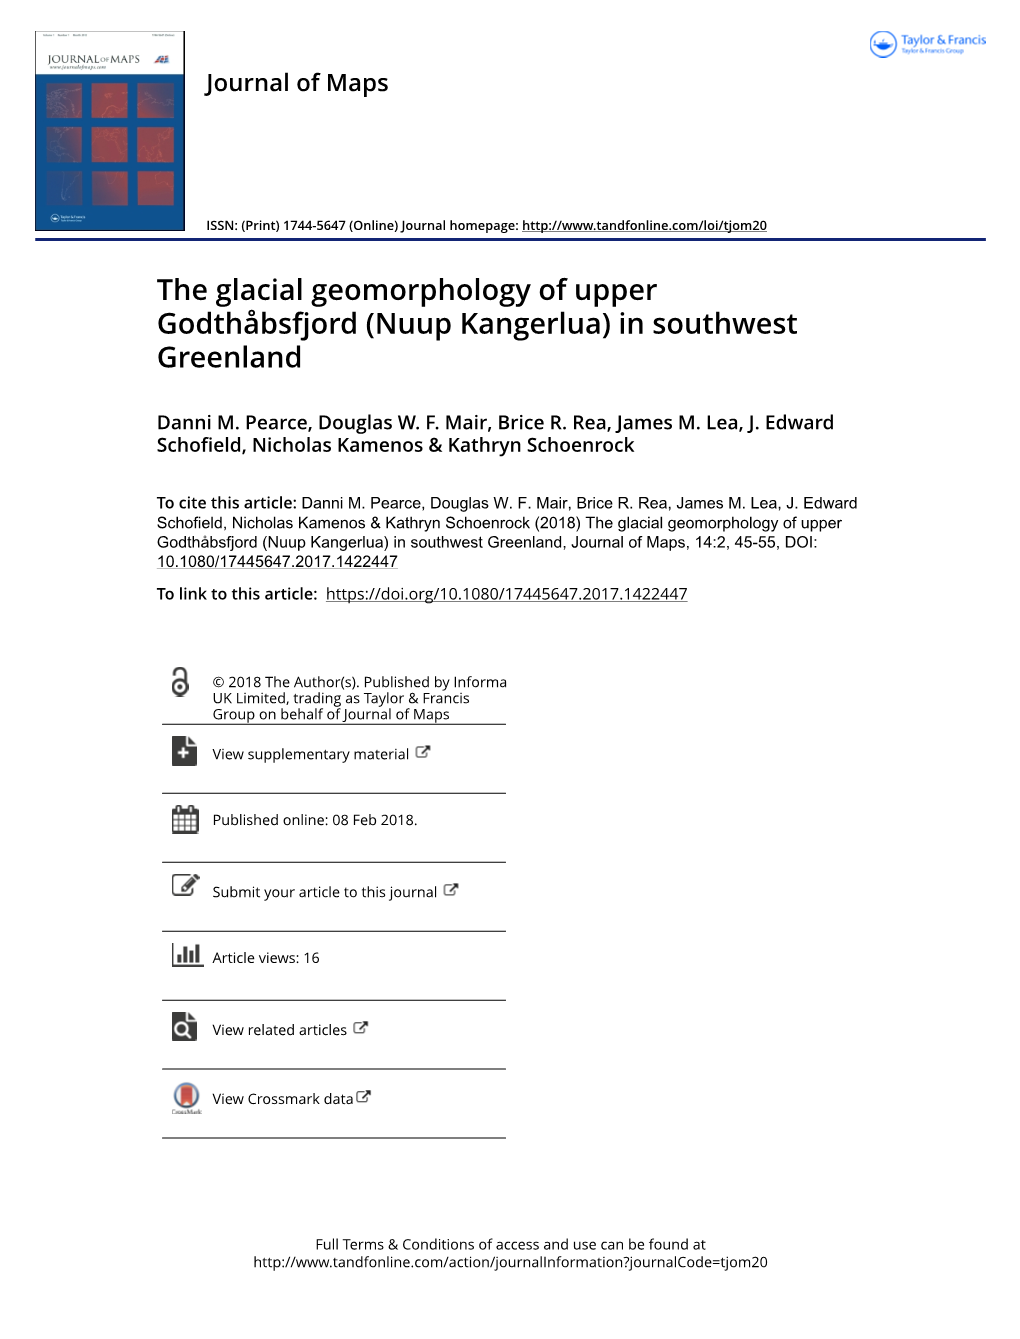 The Glacial Geomorphology of Upper Godthåbsfjord (Nuup Kangerlua) in Southwest Greenland